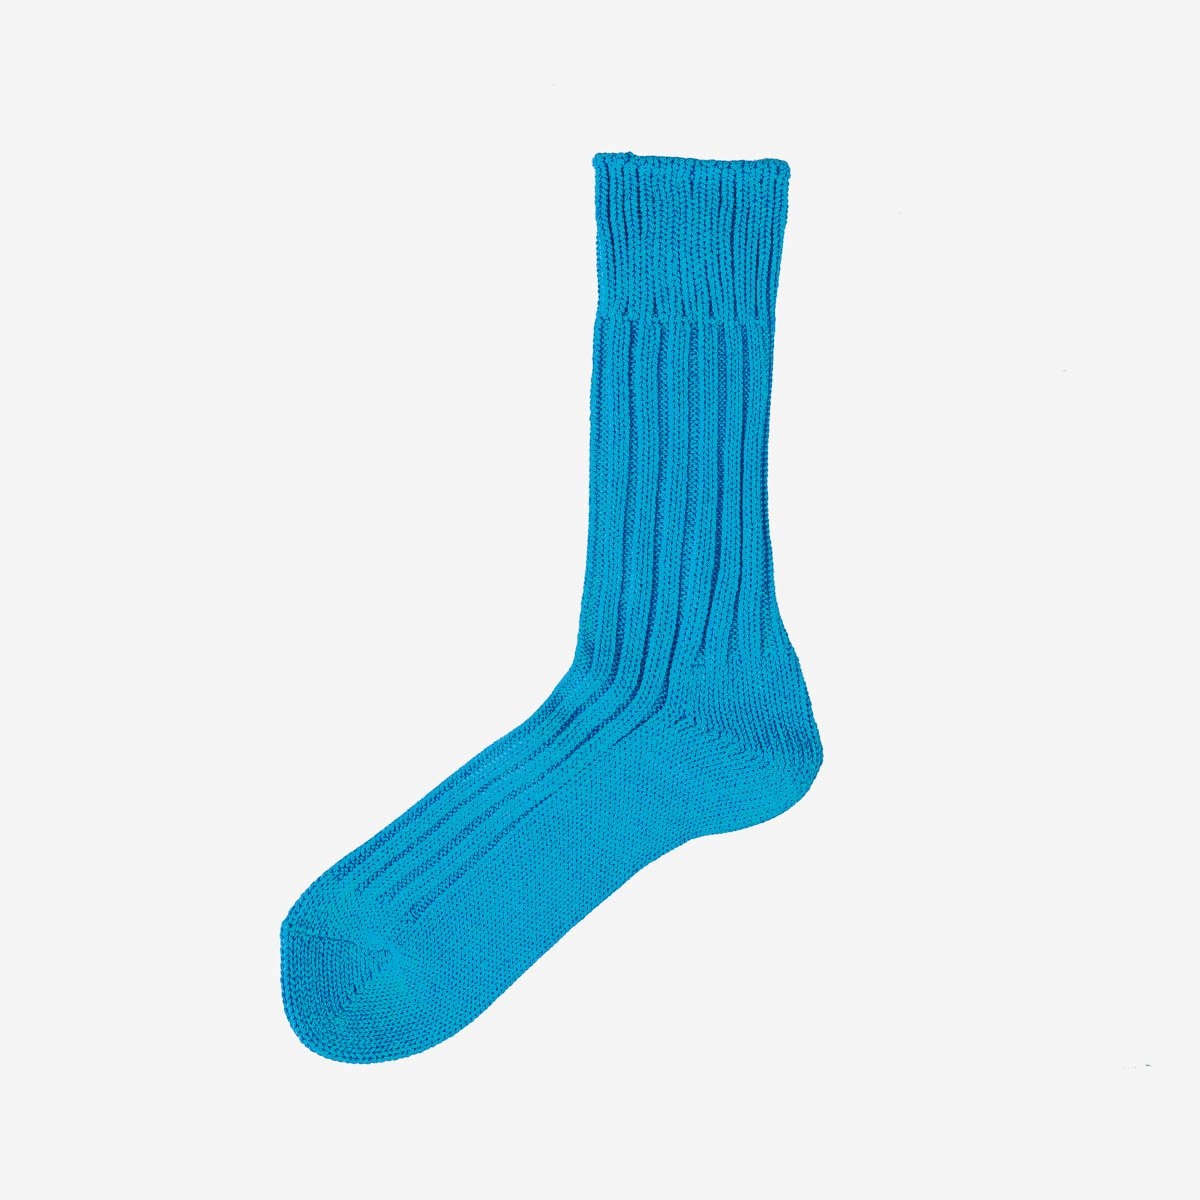 DEC-CAS-N-BLU Decka Cased Heavyweight Plain Socks - Neon Blue - 3